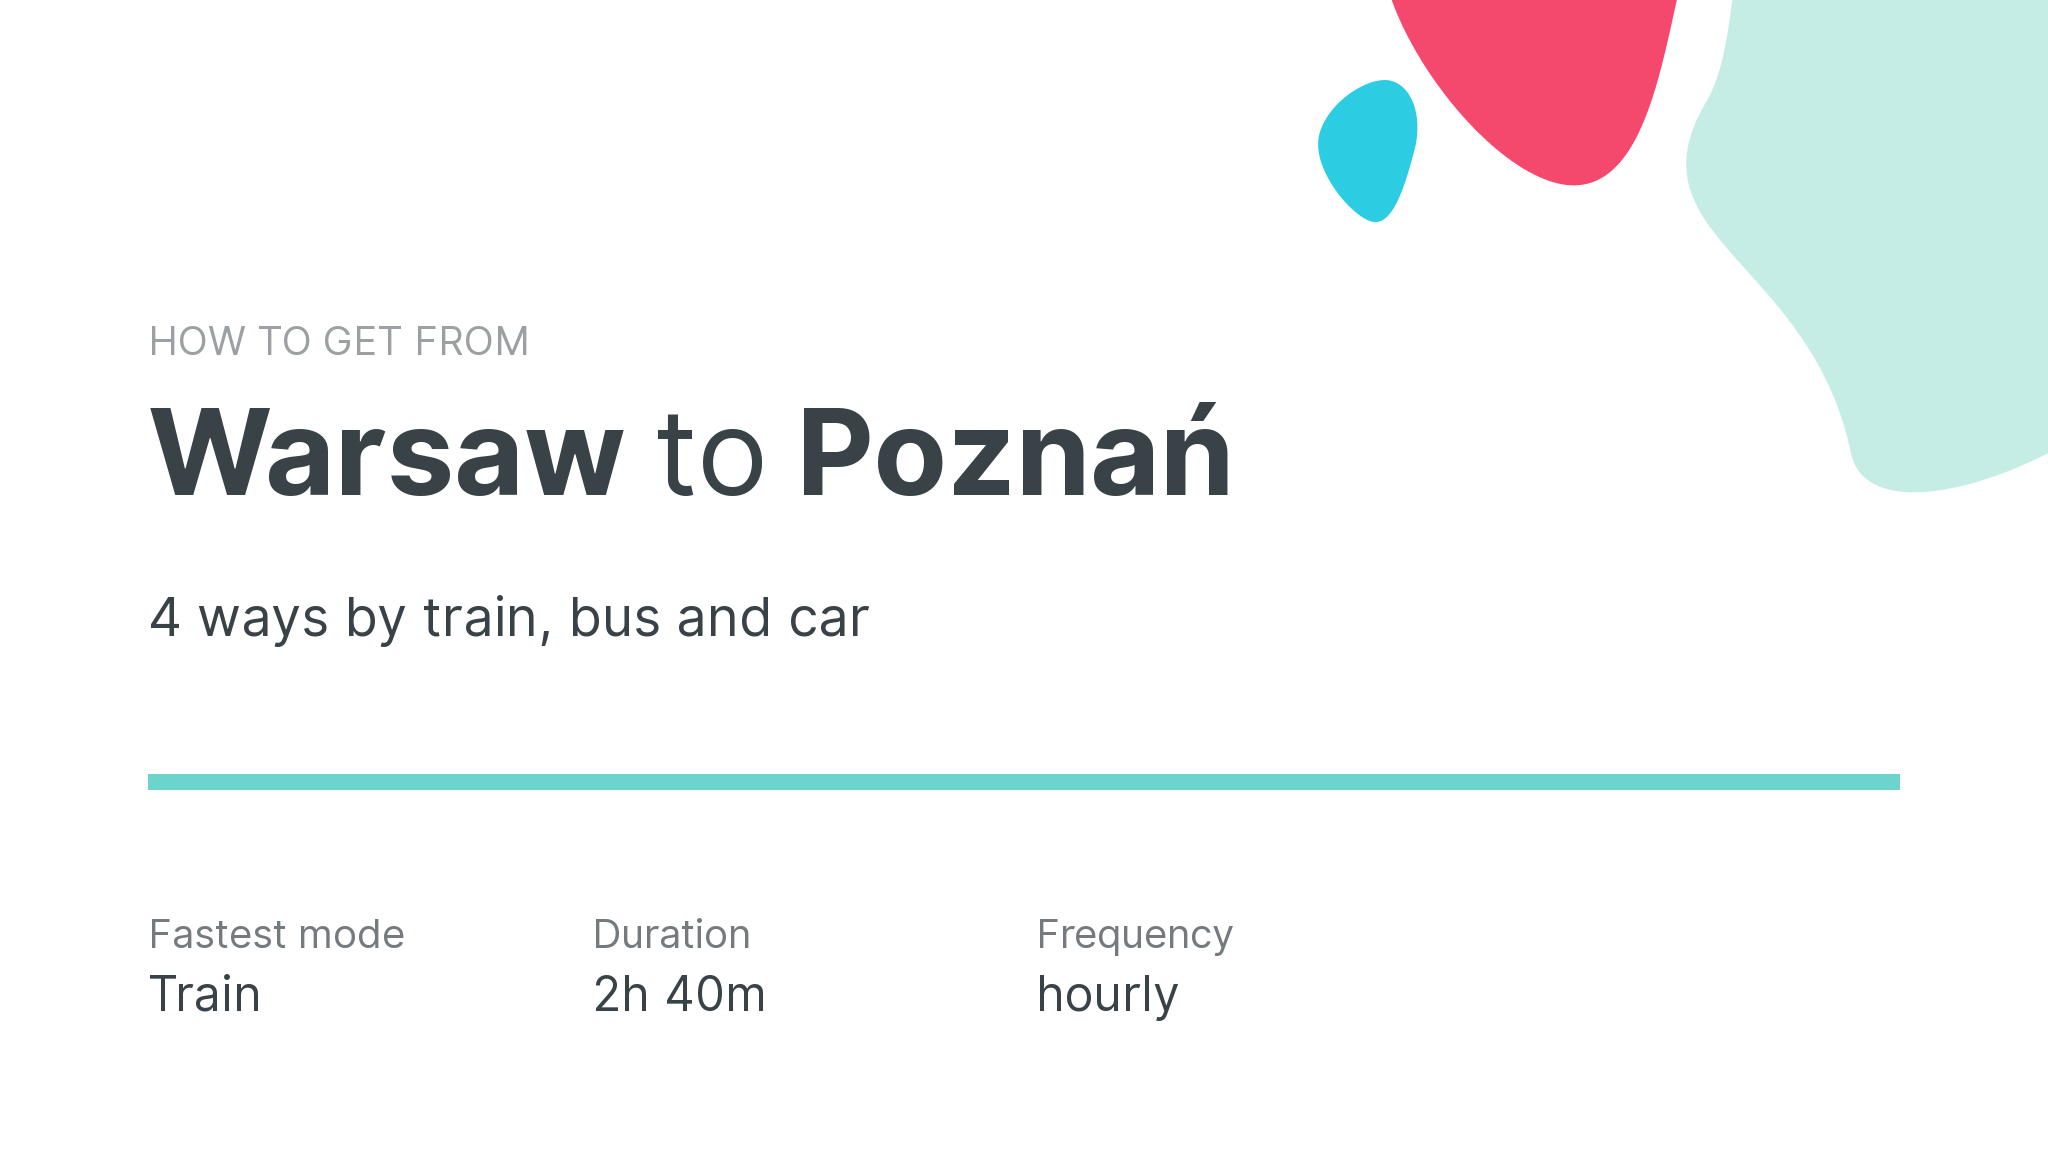 How do I get from Warsaw to Poznań